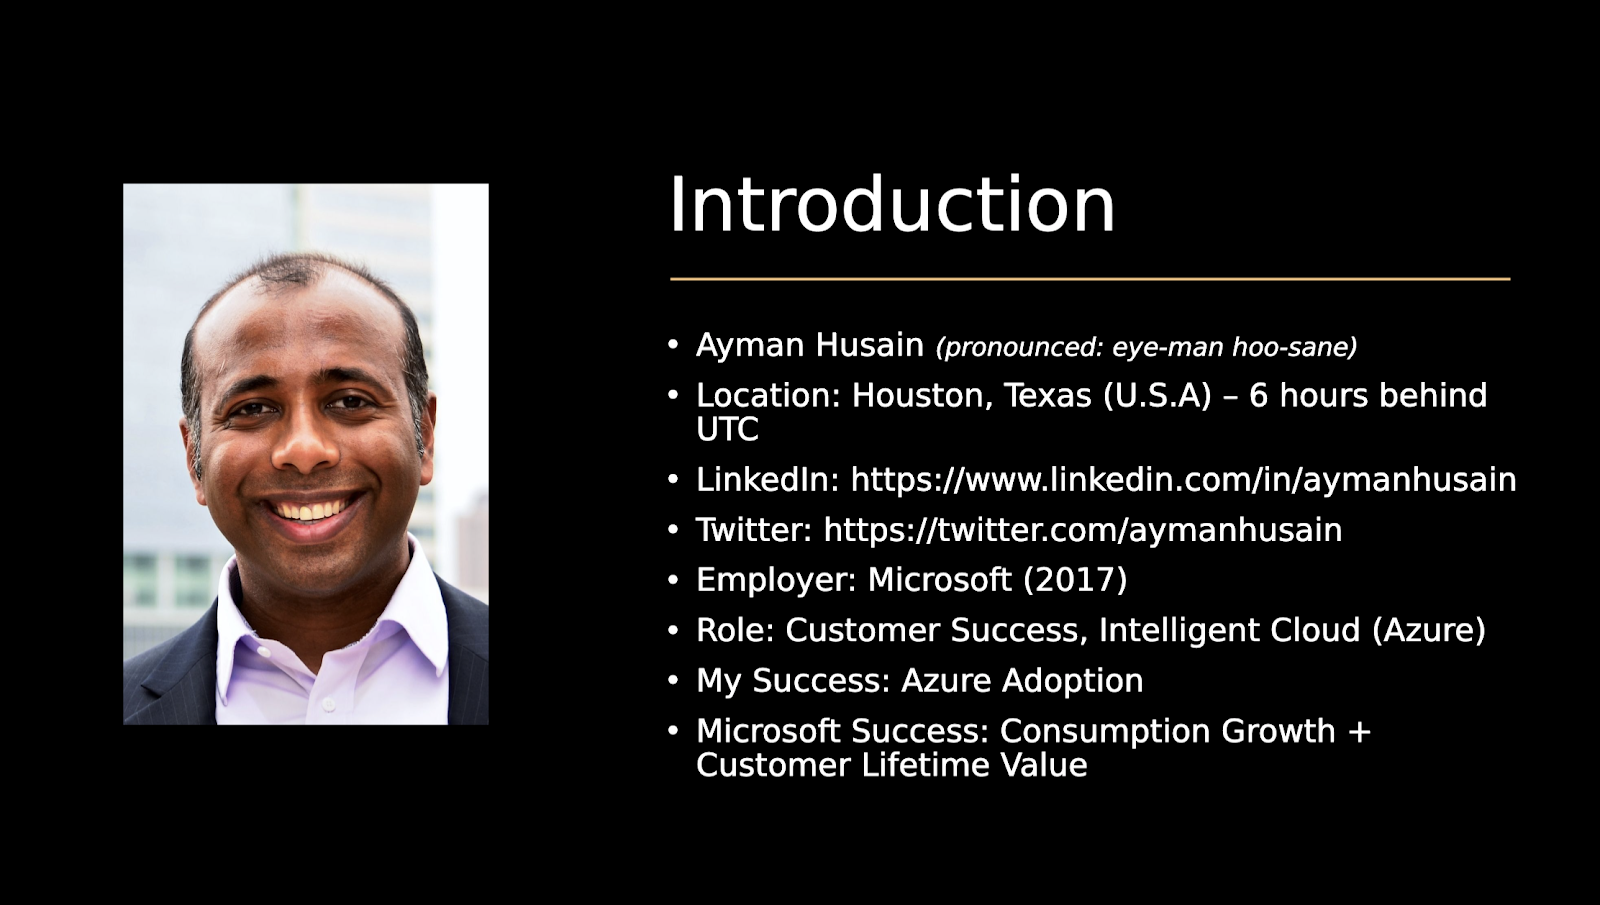 Ayman's introduction highlights slide 